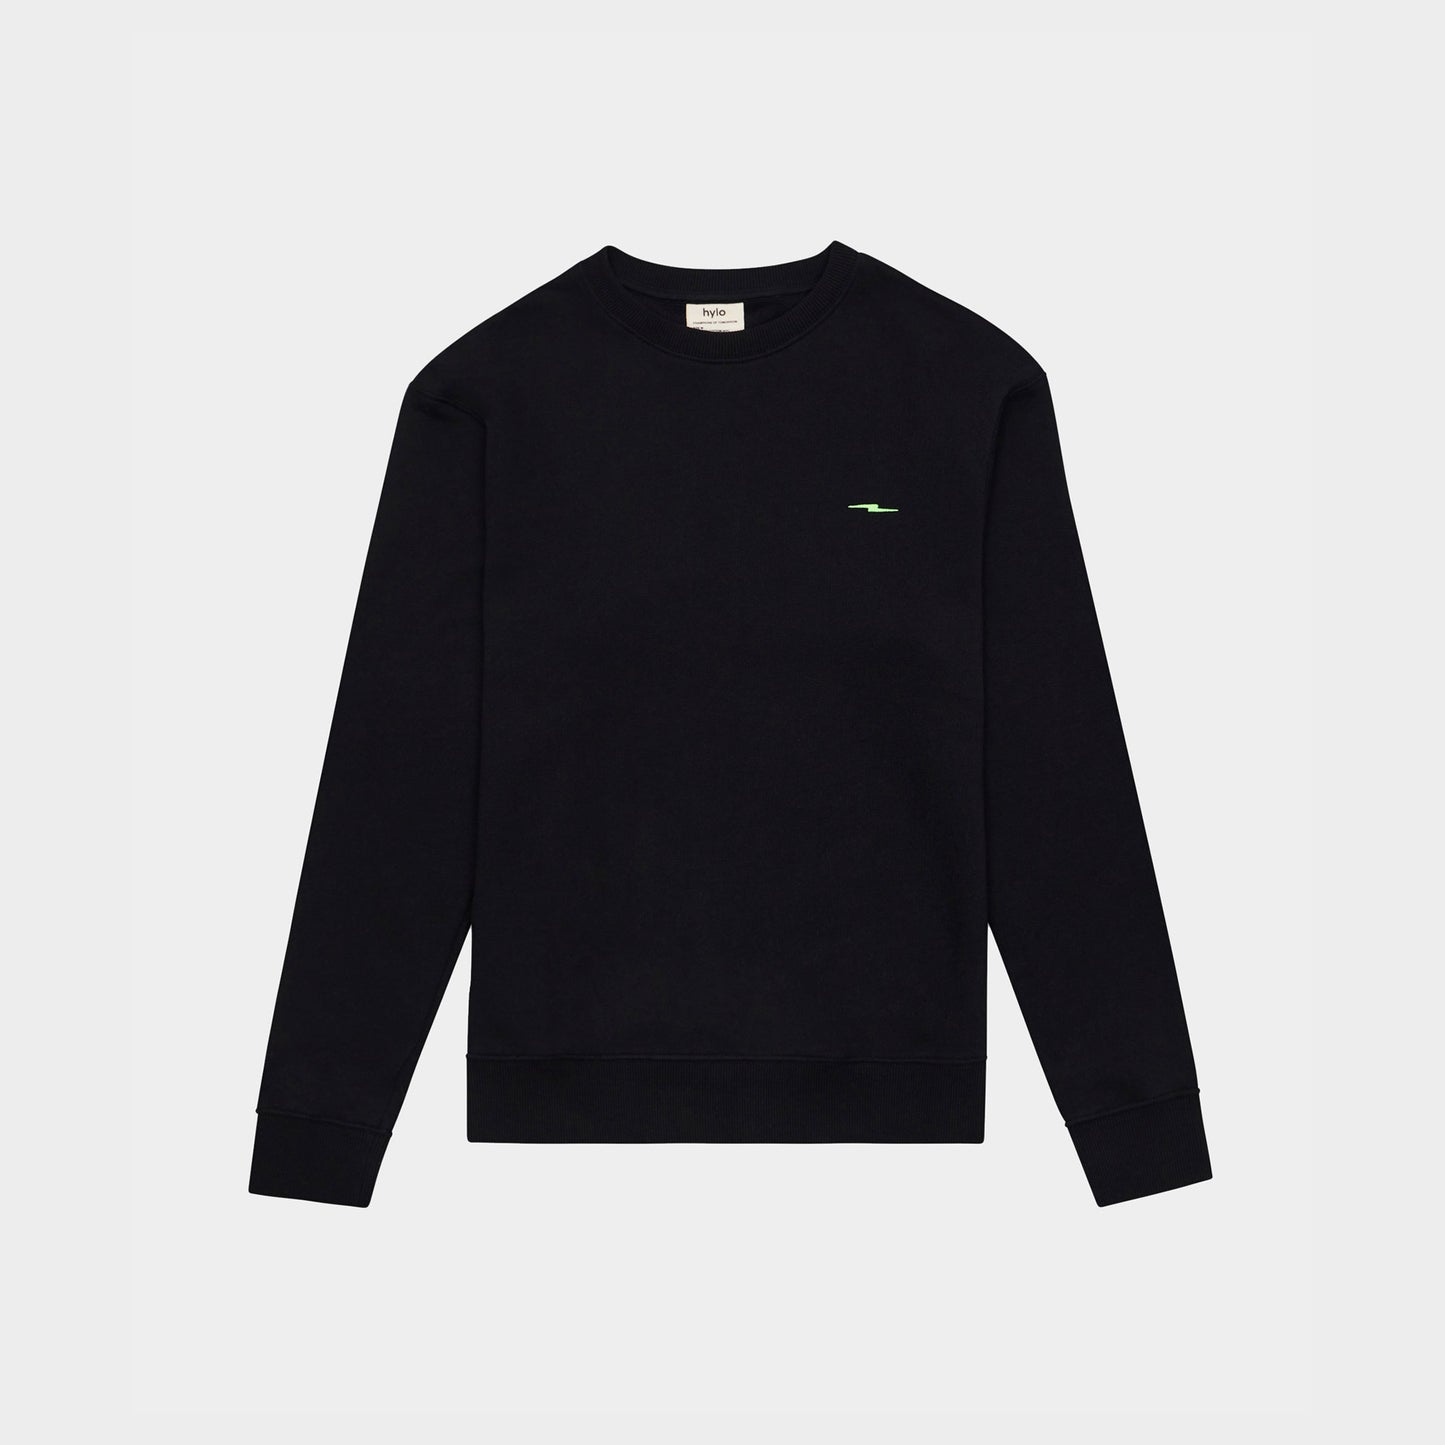 Women's Graphic Sweatshirt - Black/Solar Green